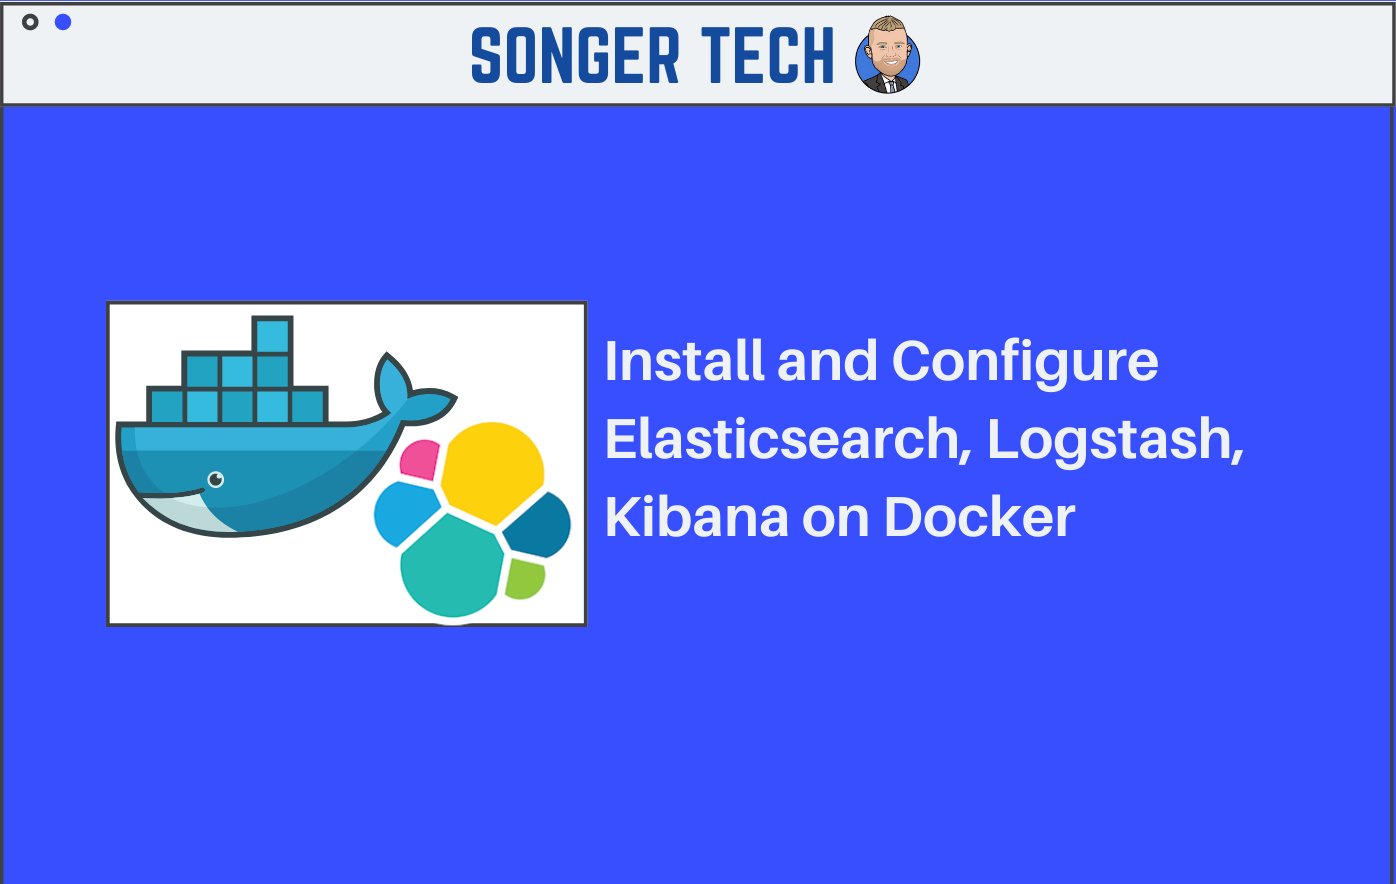 Install and Configure Elasticsearch, Logstash, Kibana on Docker